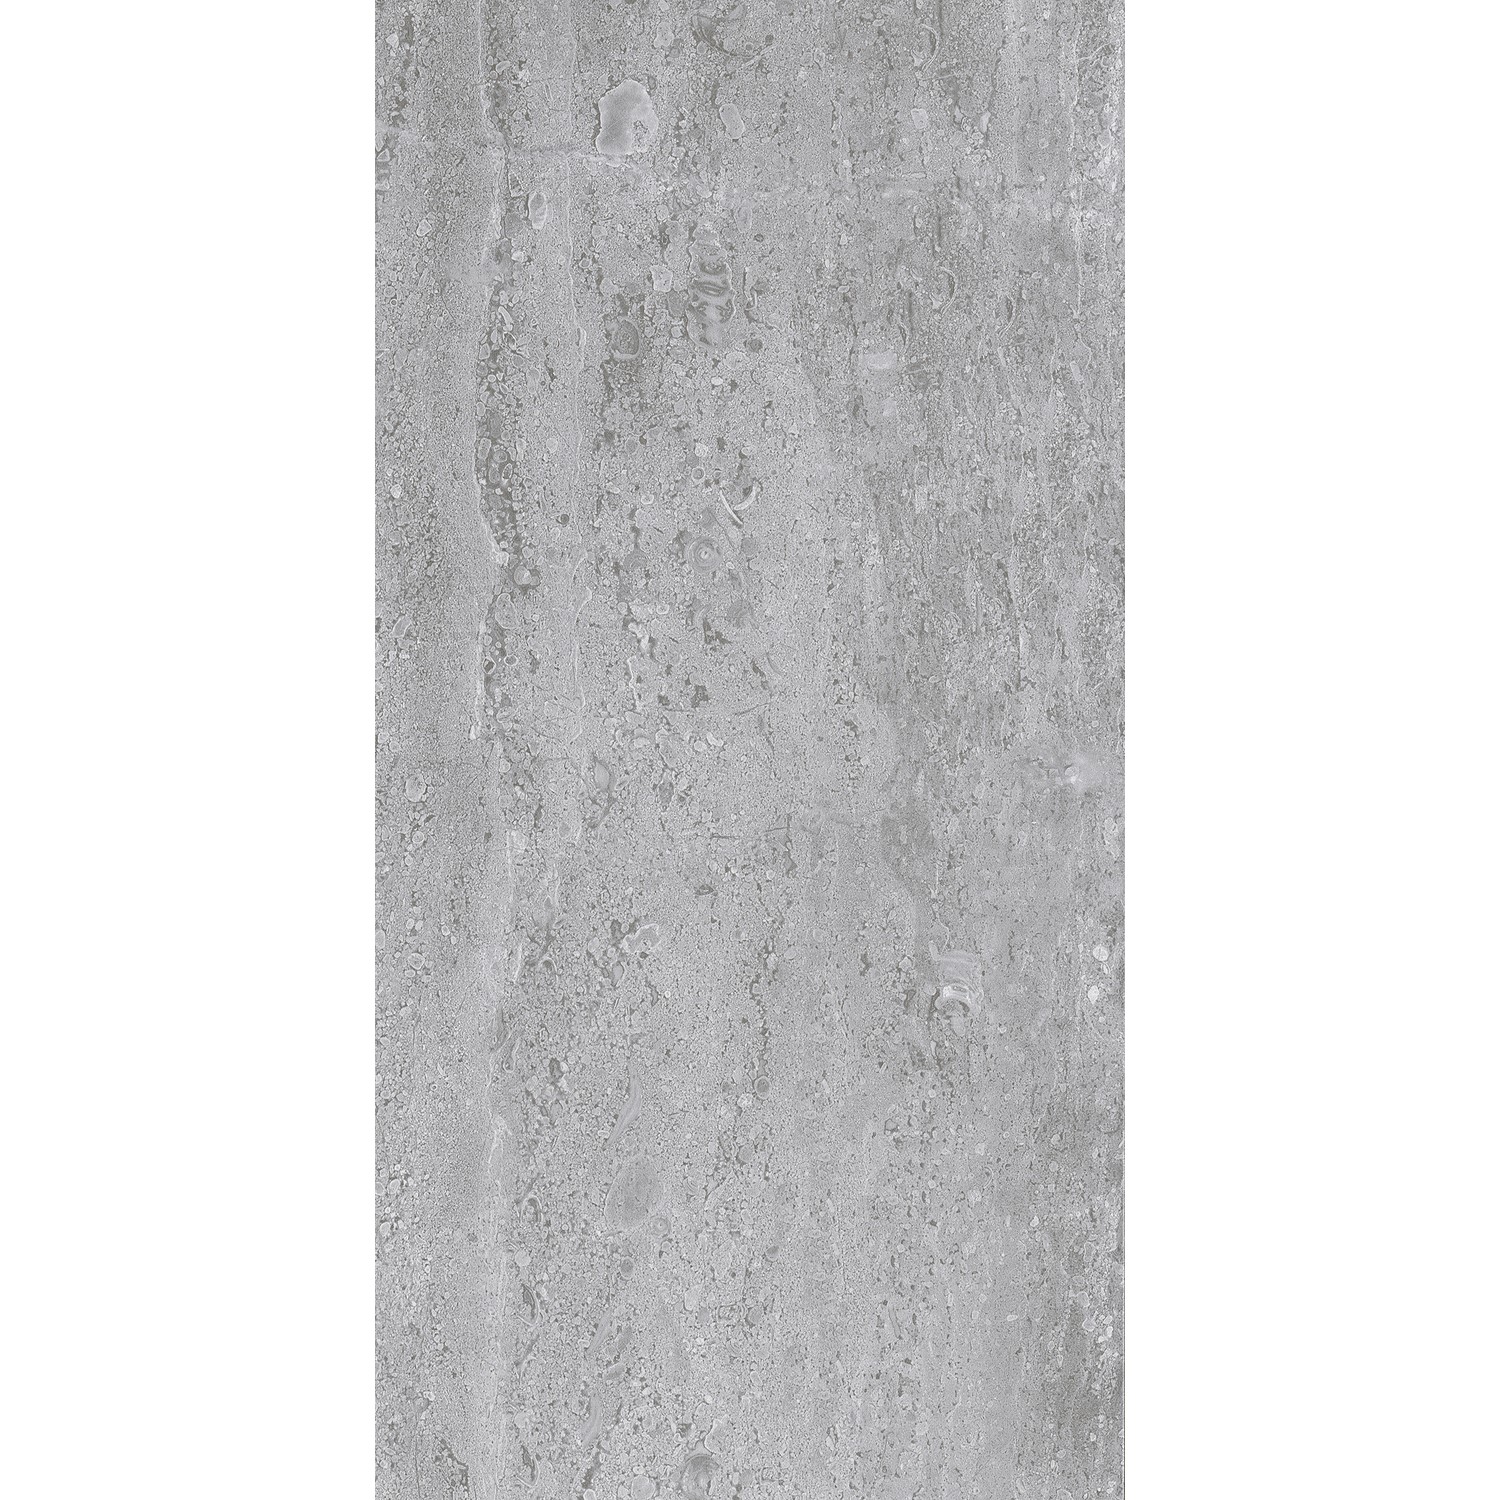 Dark Grey Stone Effect Wall Tile 30 x 60cm - Kaya